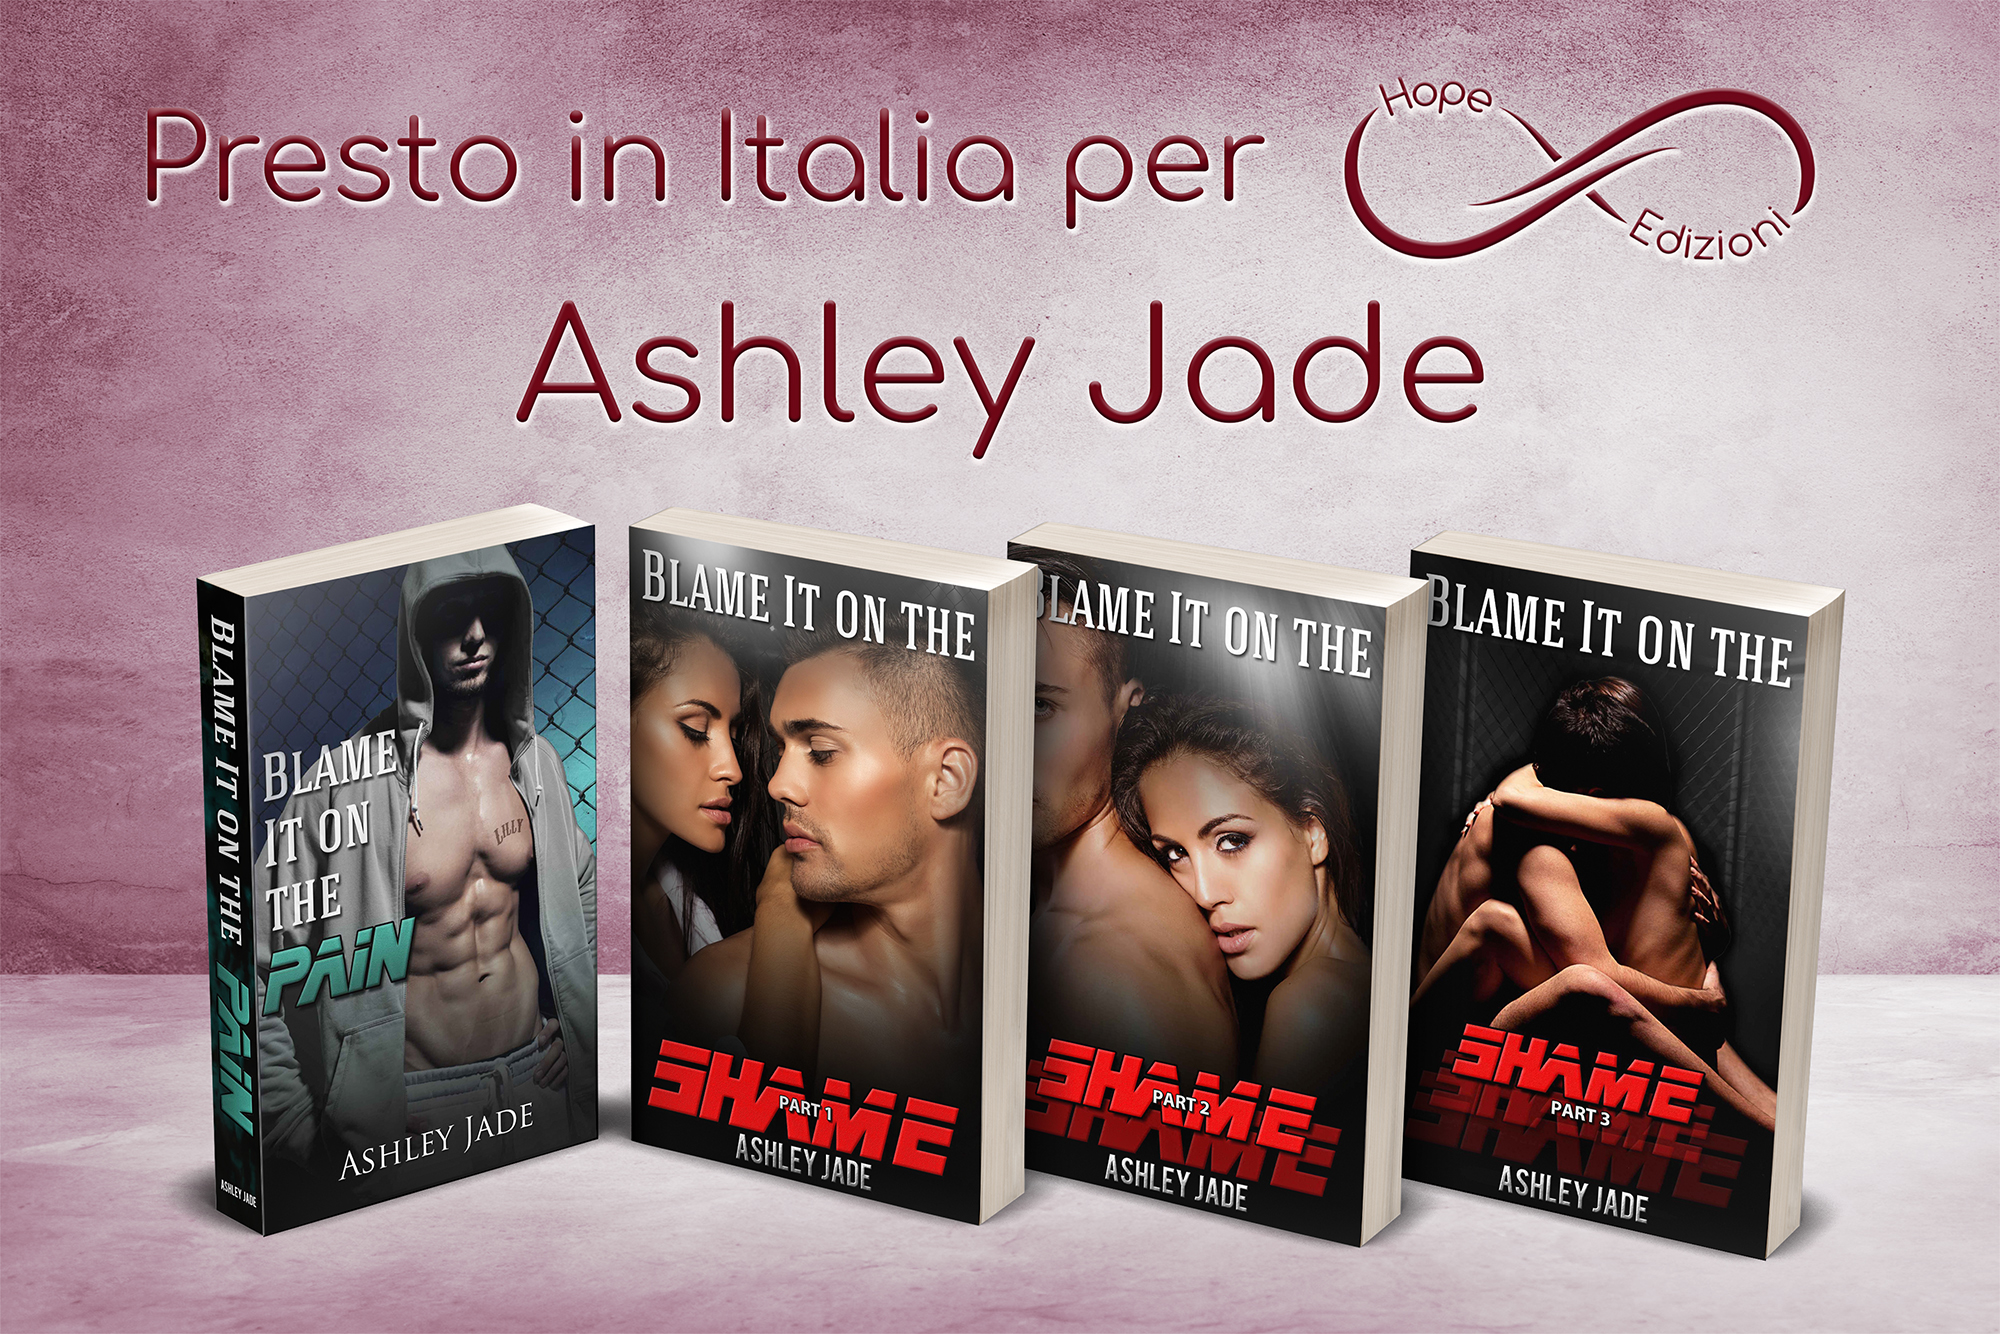 Presto in Italia… Ashley Jade!